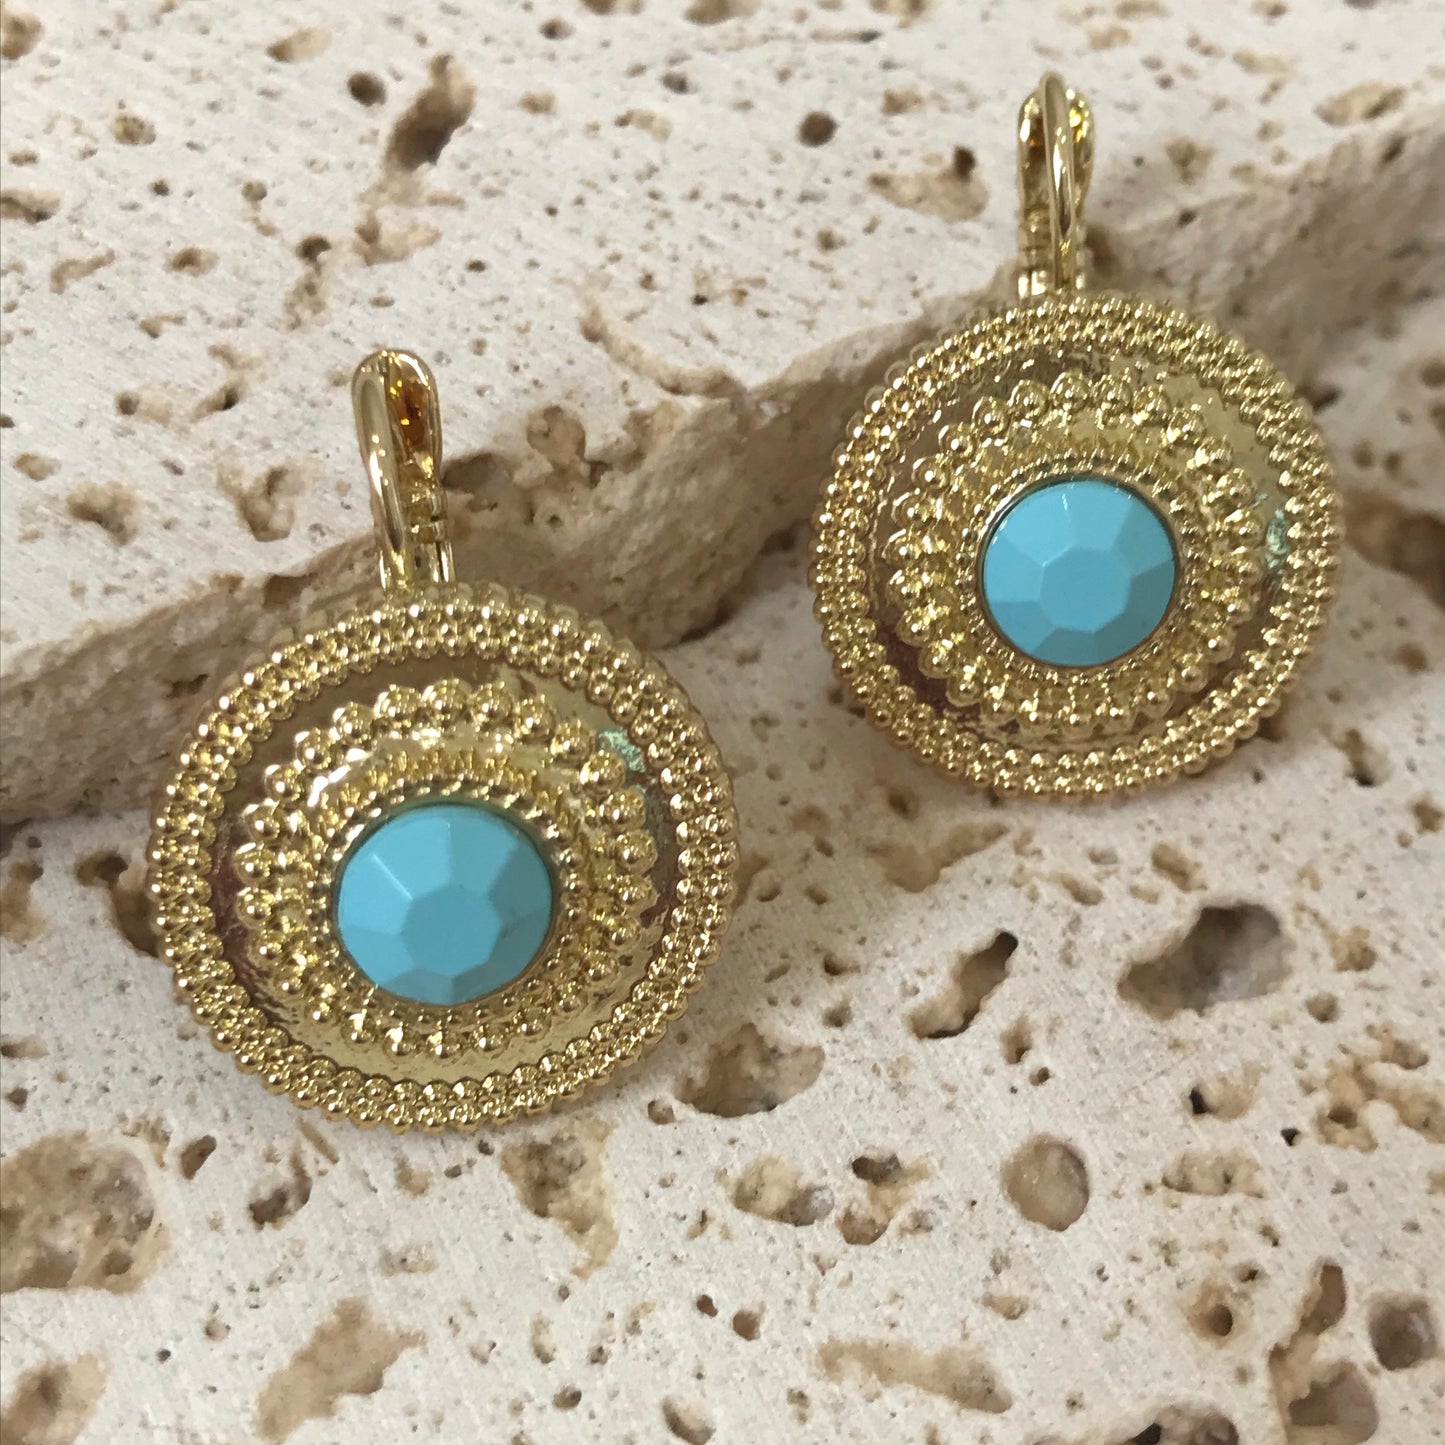 Dainty gold and aqua bead earrings